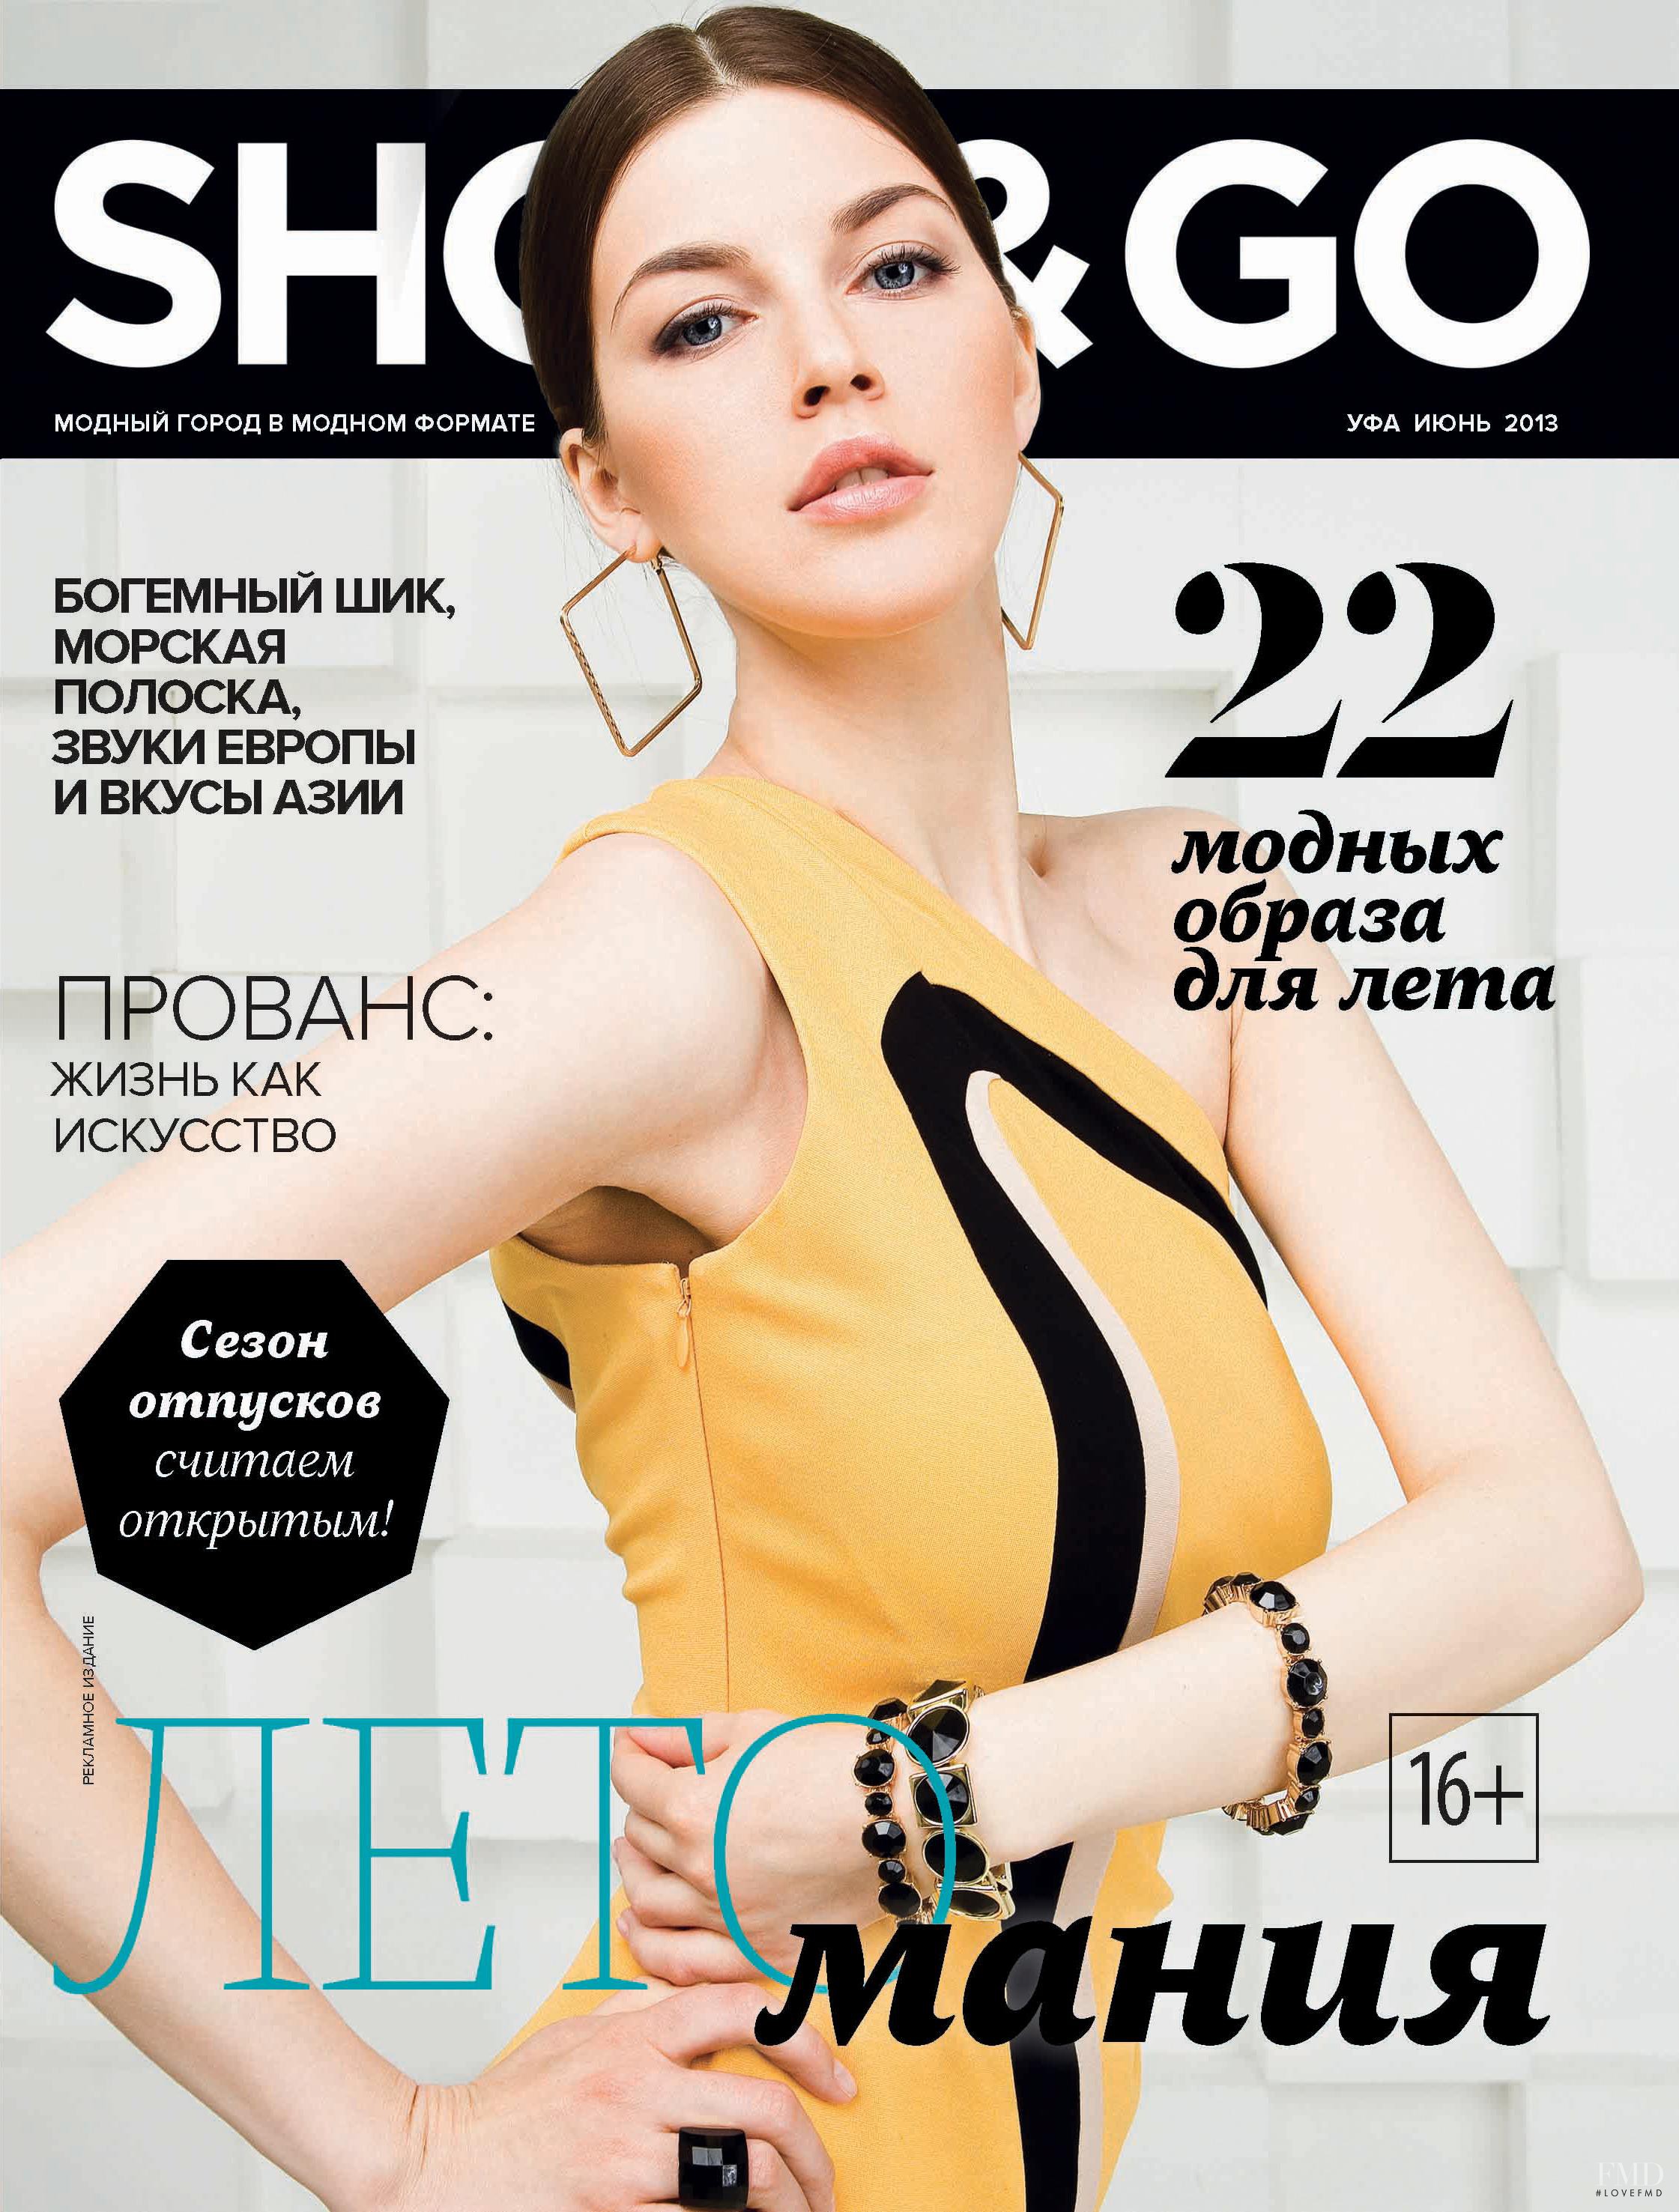 Go magazine. Обложка журнала go. Shop go журнал. Журнал going. Модный город Рязань.